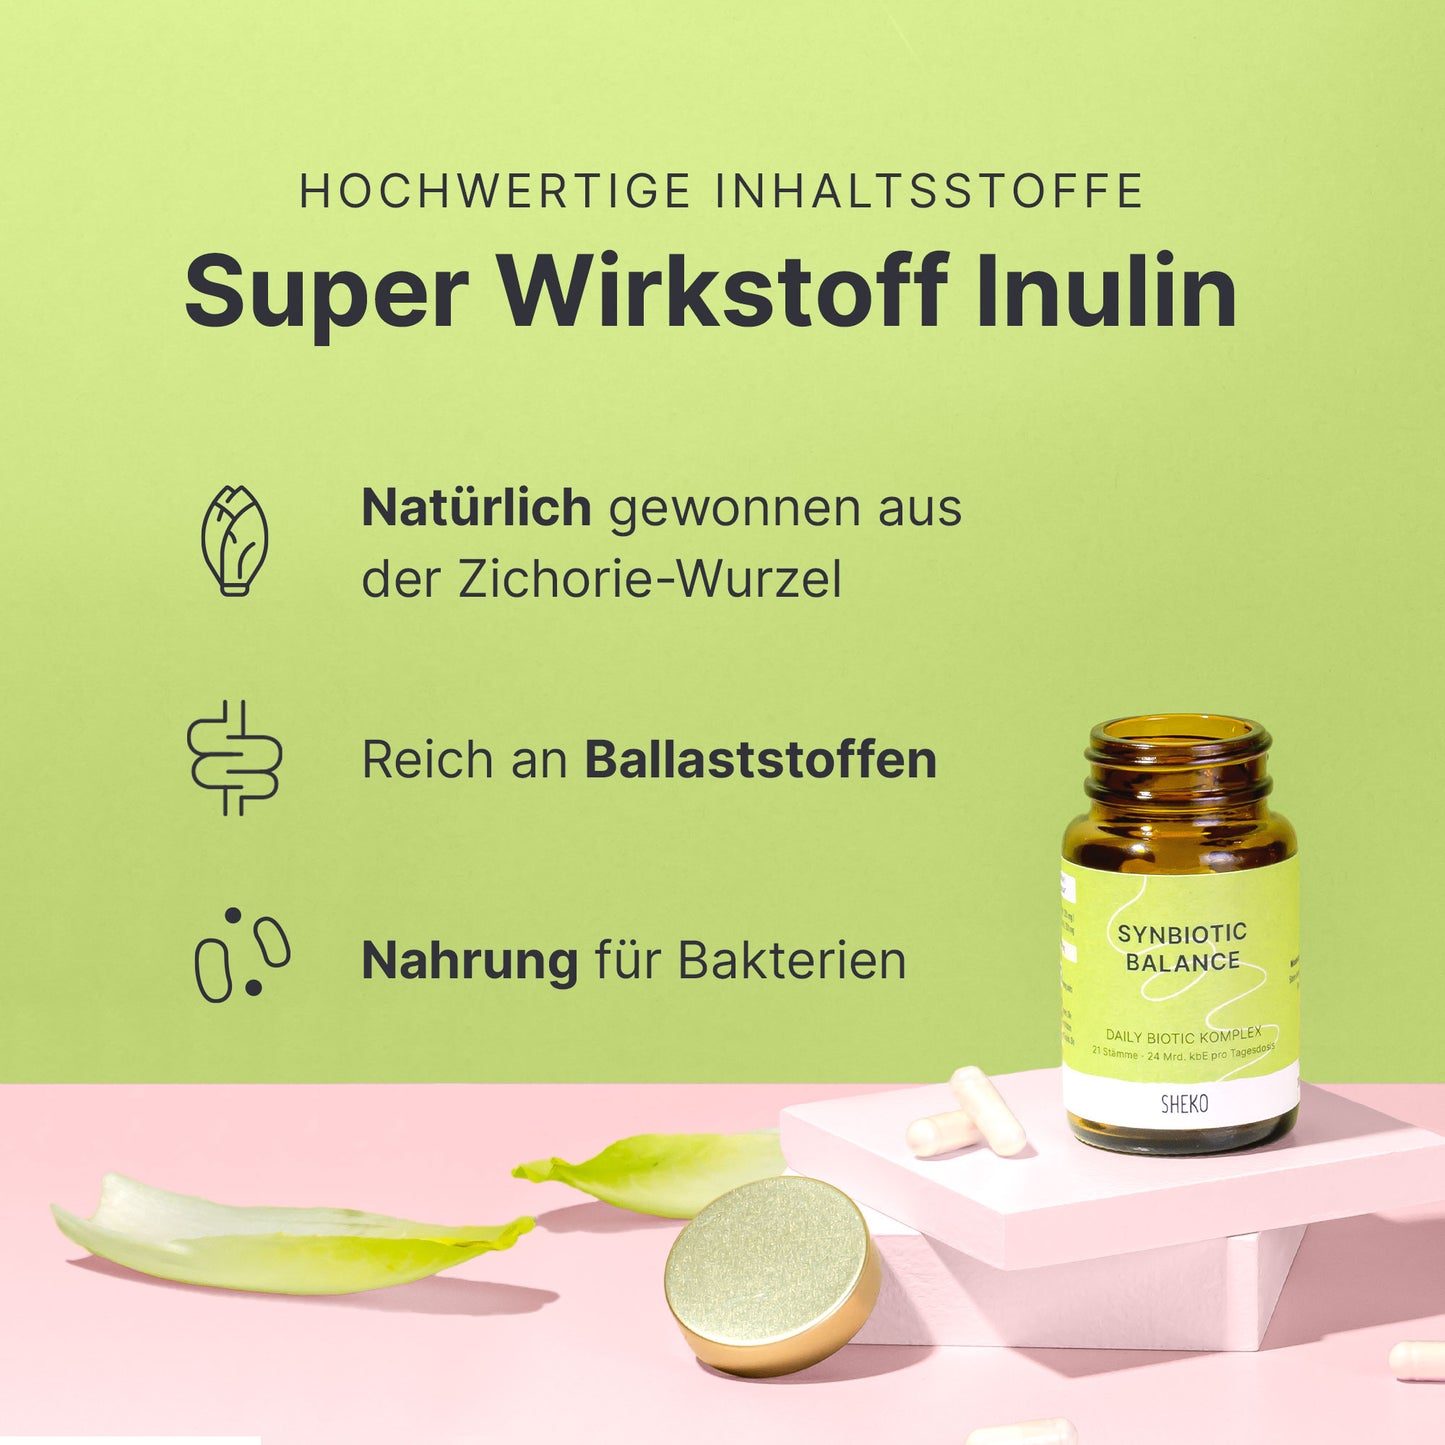 Super Wirkstoff Inulin